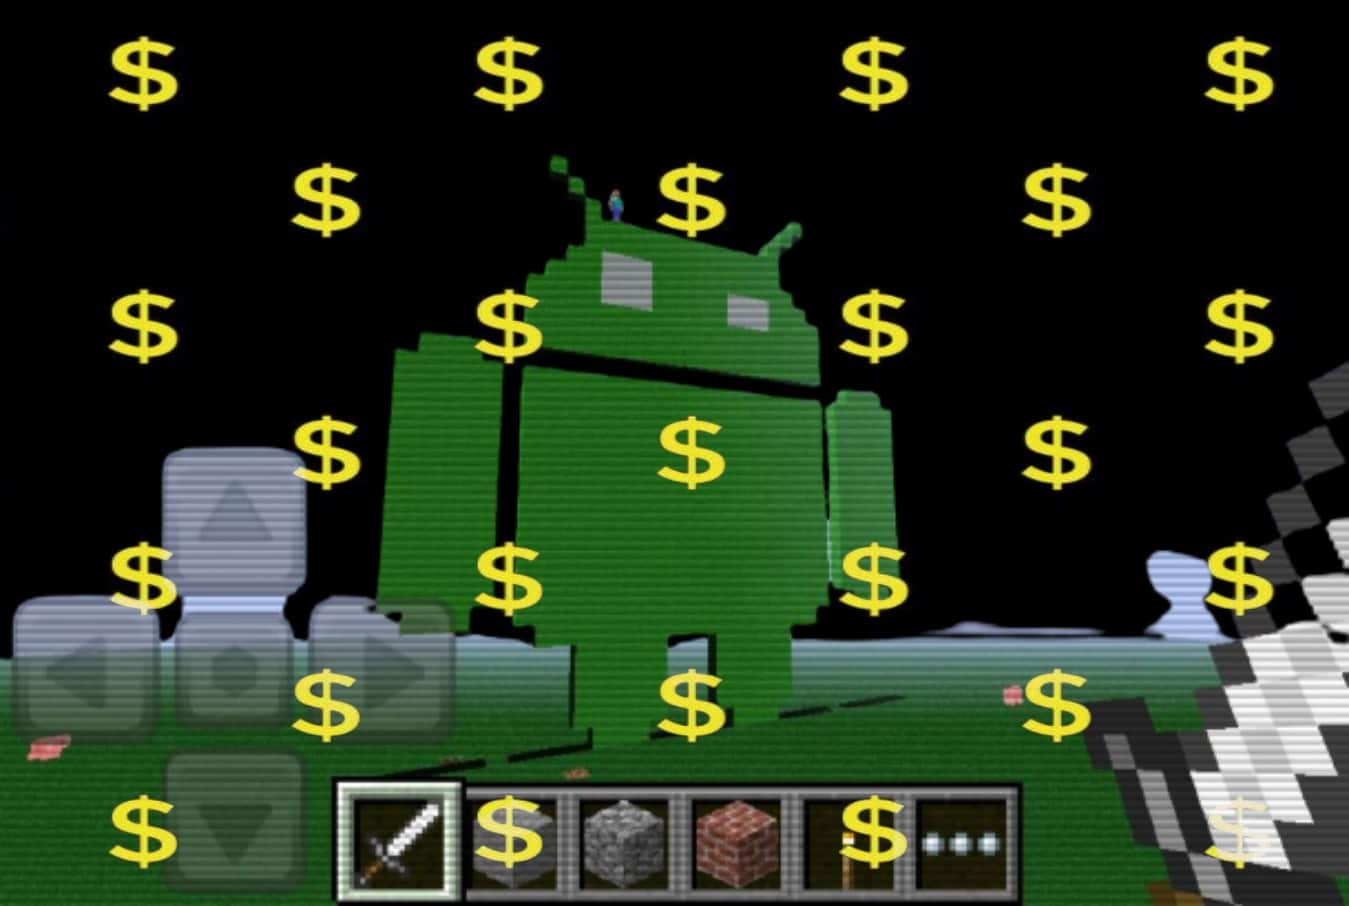 Minecraft – Apps on Google Play